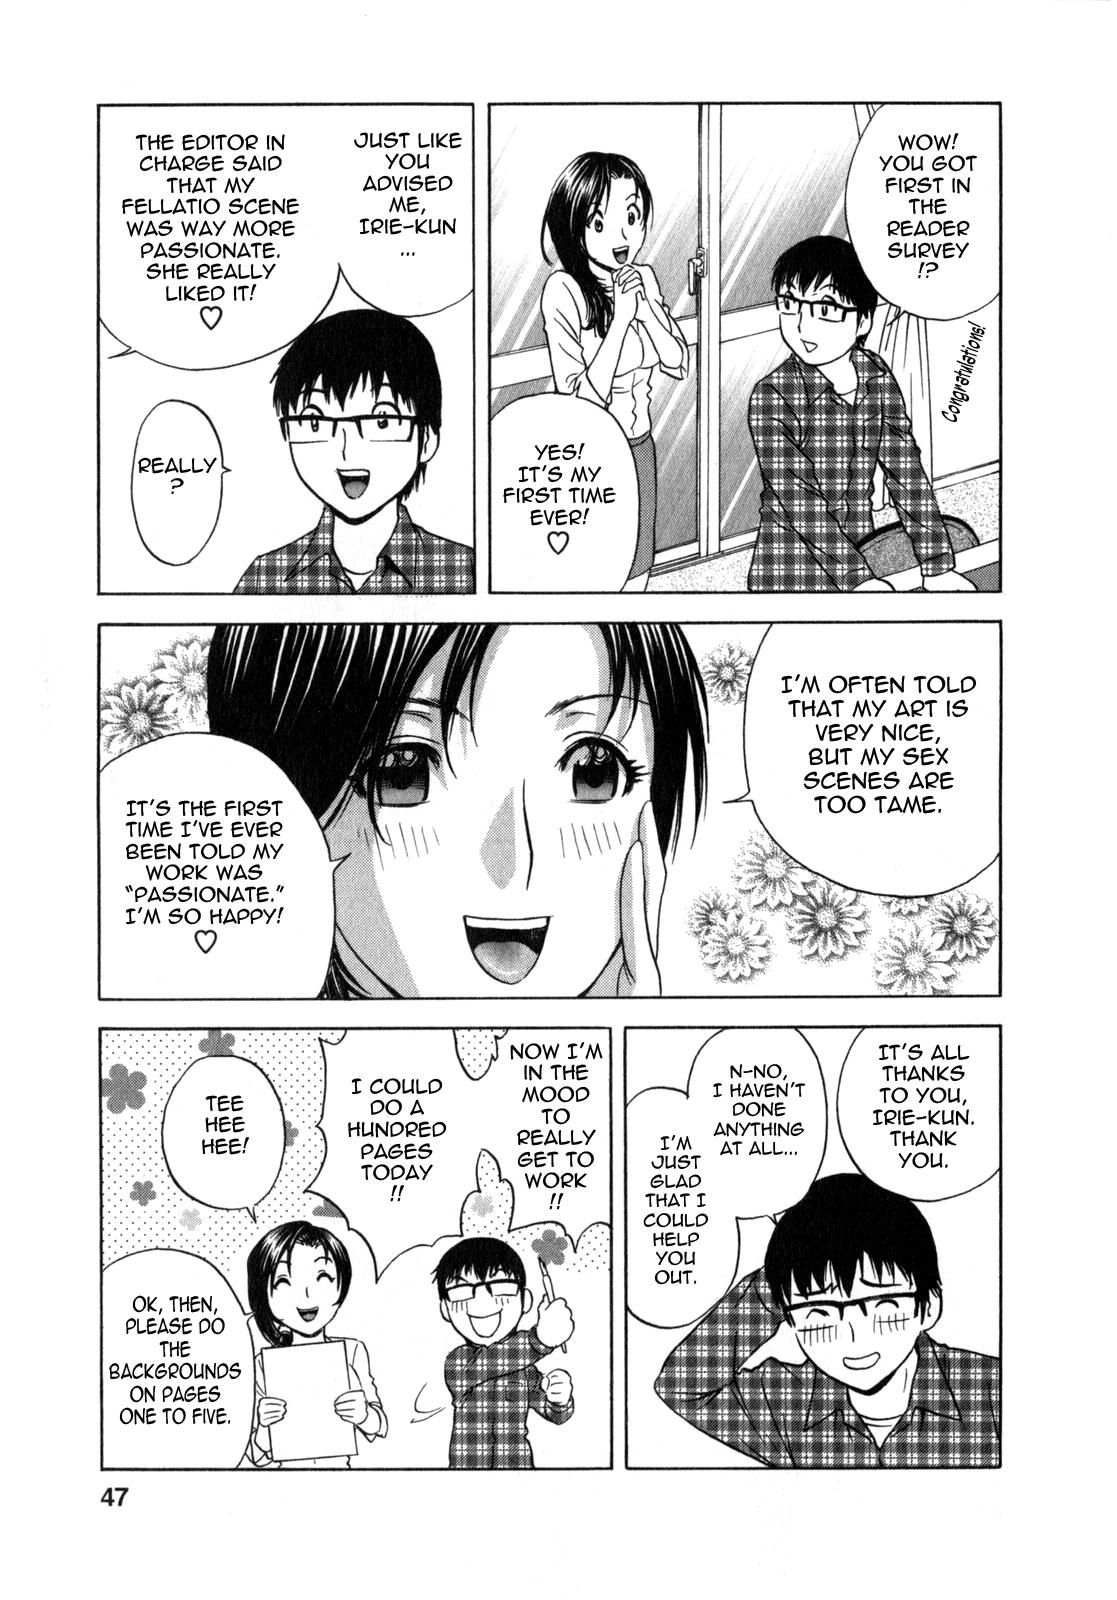 [Hidemaru] Life with Married Women Just Like a Manga 1 - Ch. 1-4 [English] {Tadanohito} 49